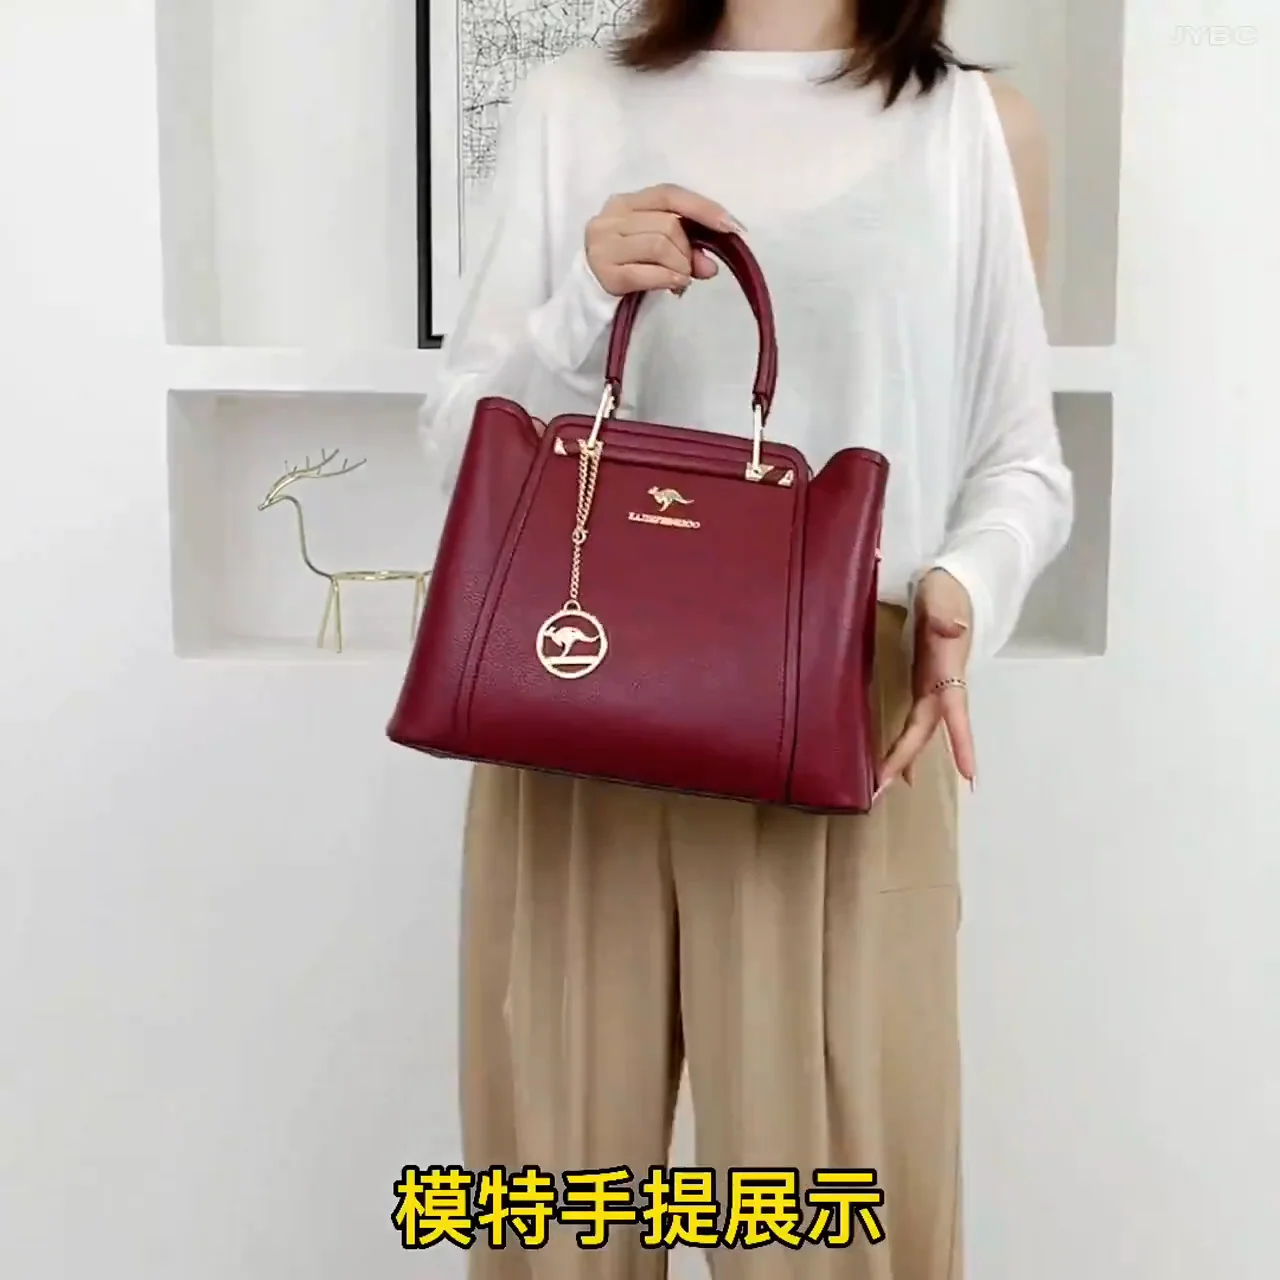 New Sac A Main Femm Women Handbag Large Capacity Shoulder Pu Leather ...